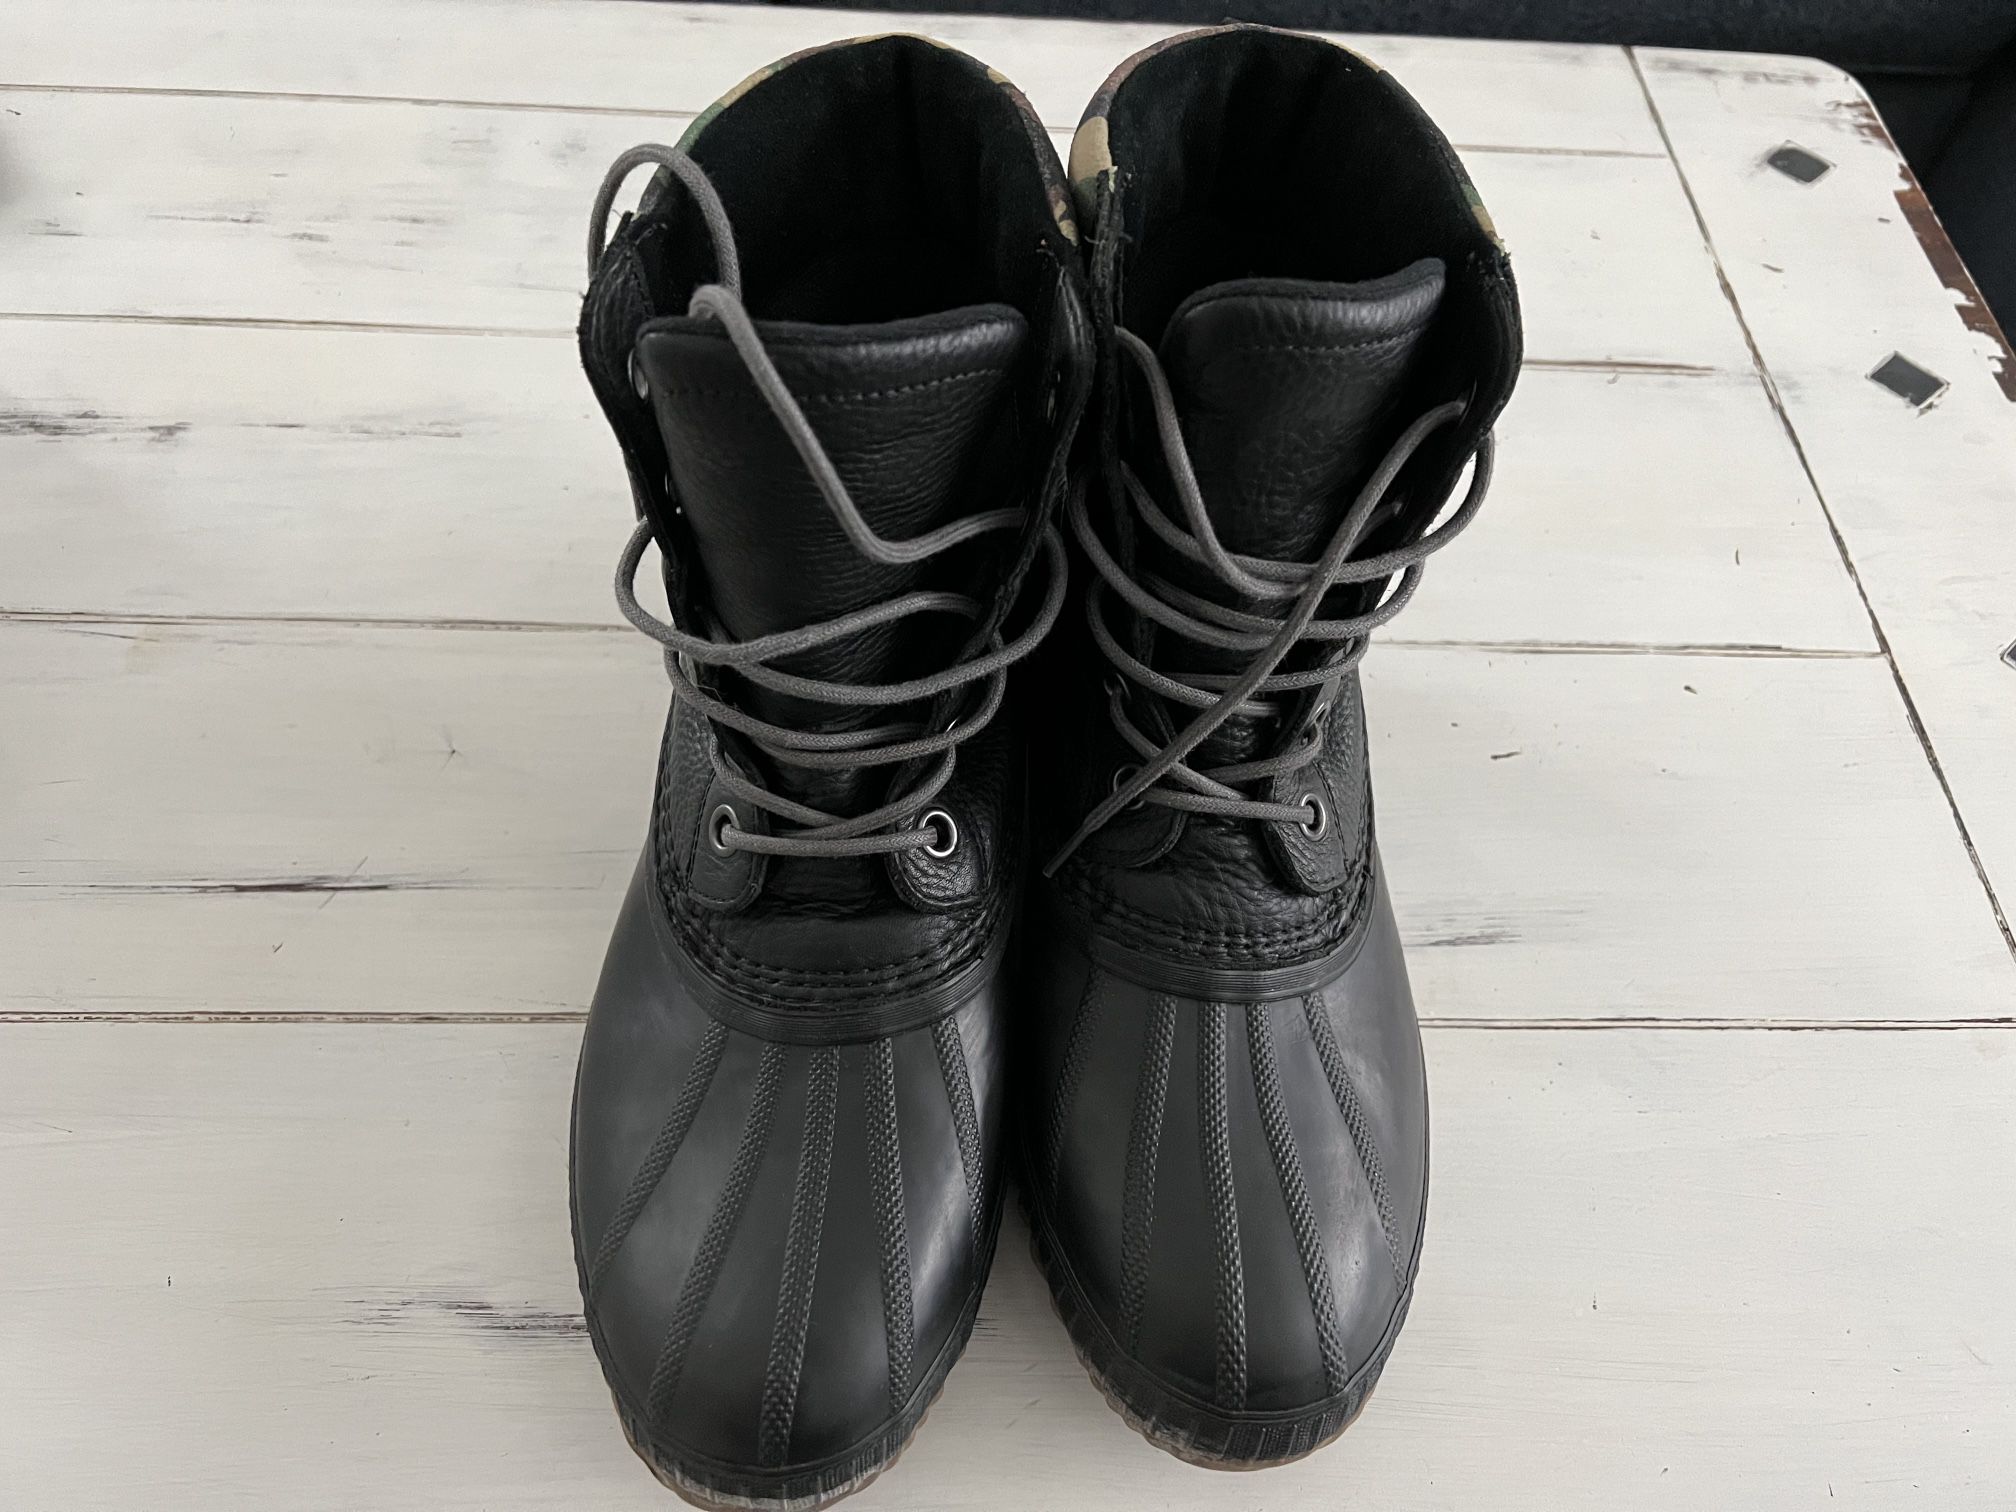 Sorel Winter Duck Boots - Size 10.5D